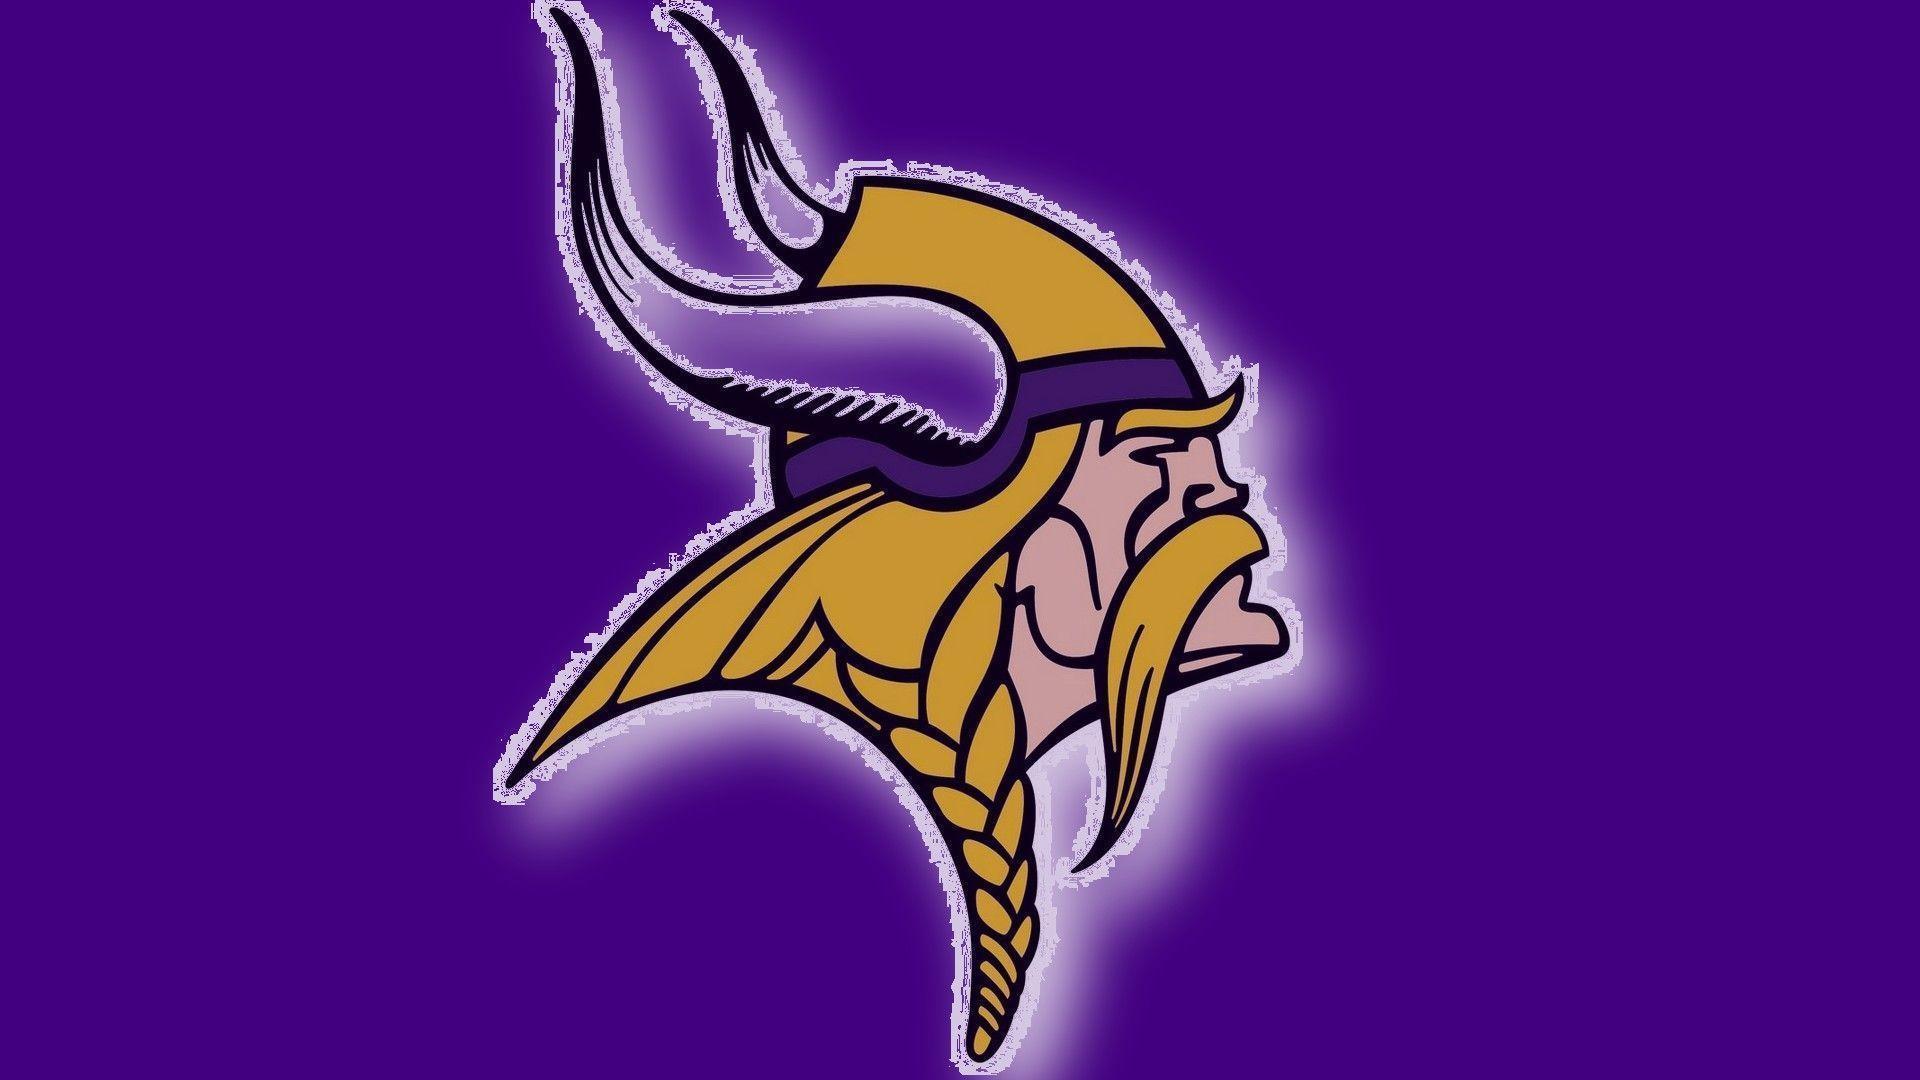 Minnesota Vikings logo hd wallpapers